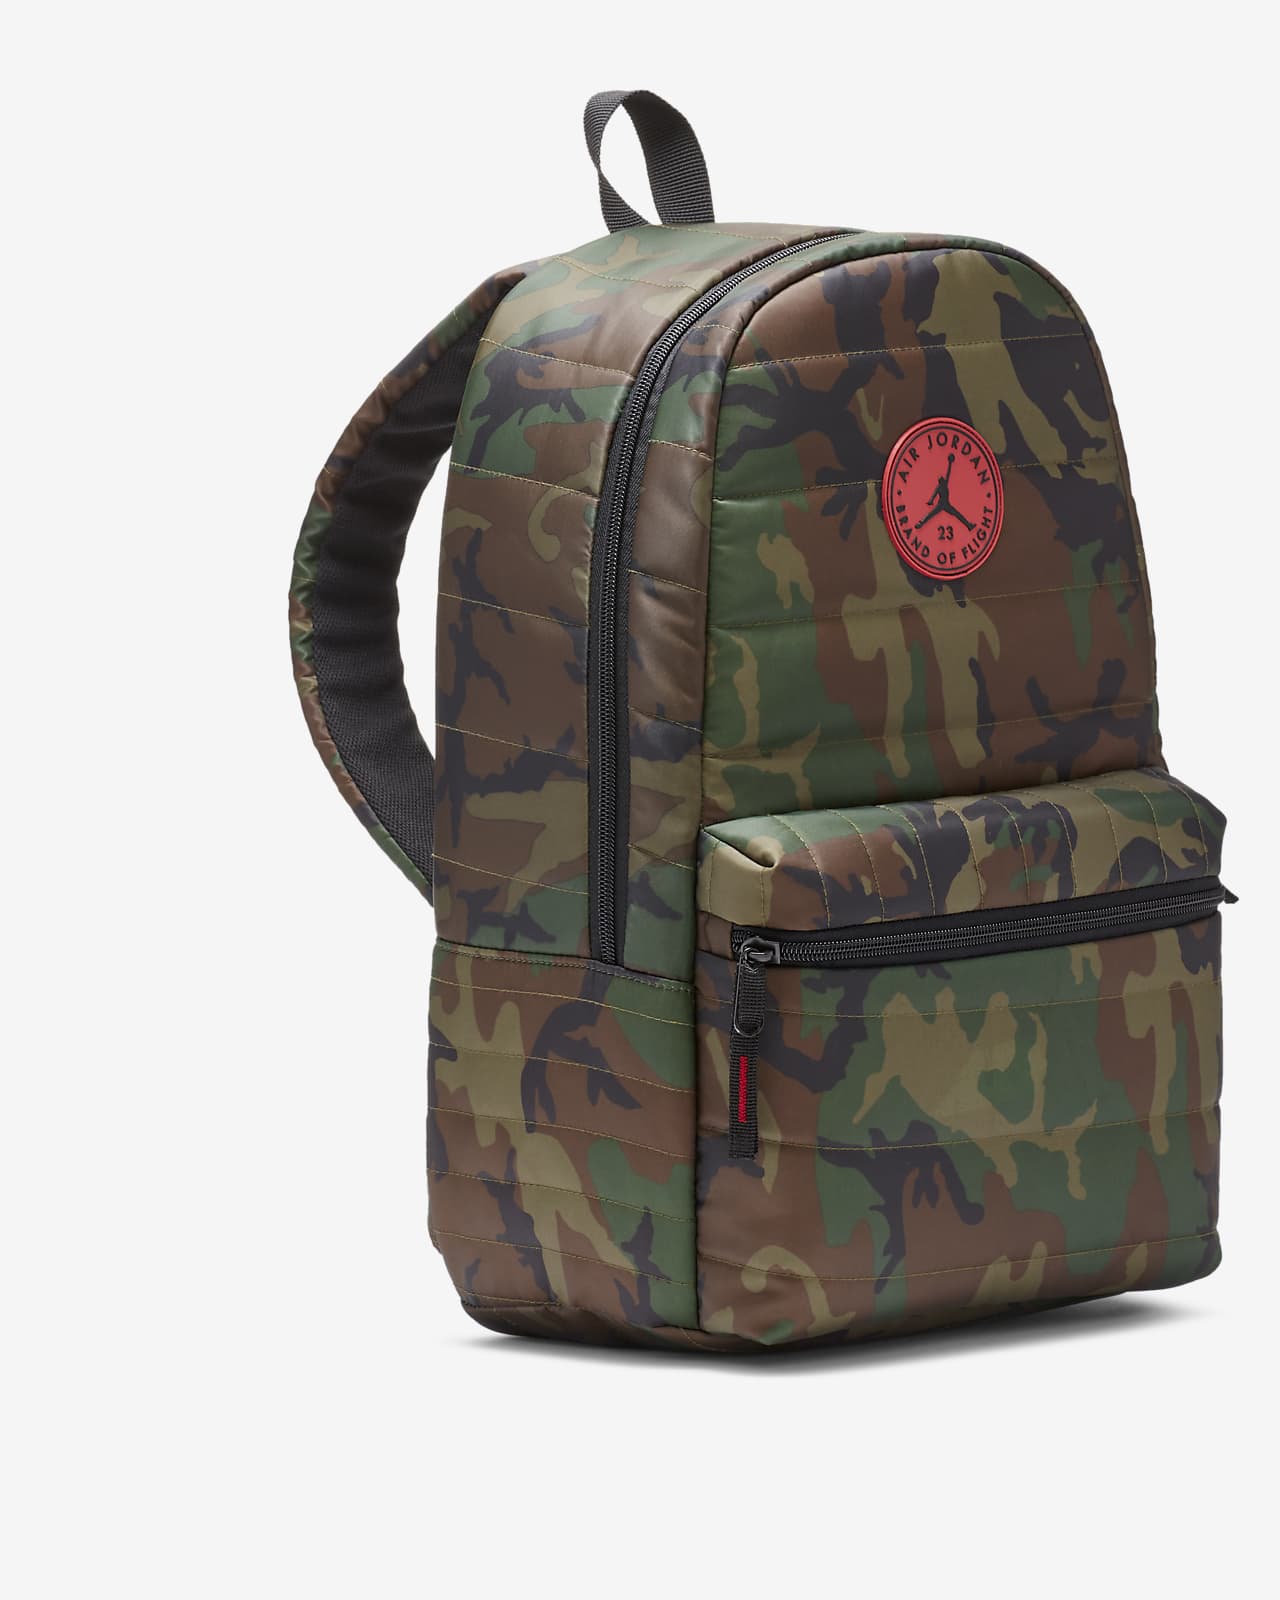 Jordan Backpack (Large). Nike.com